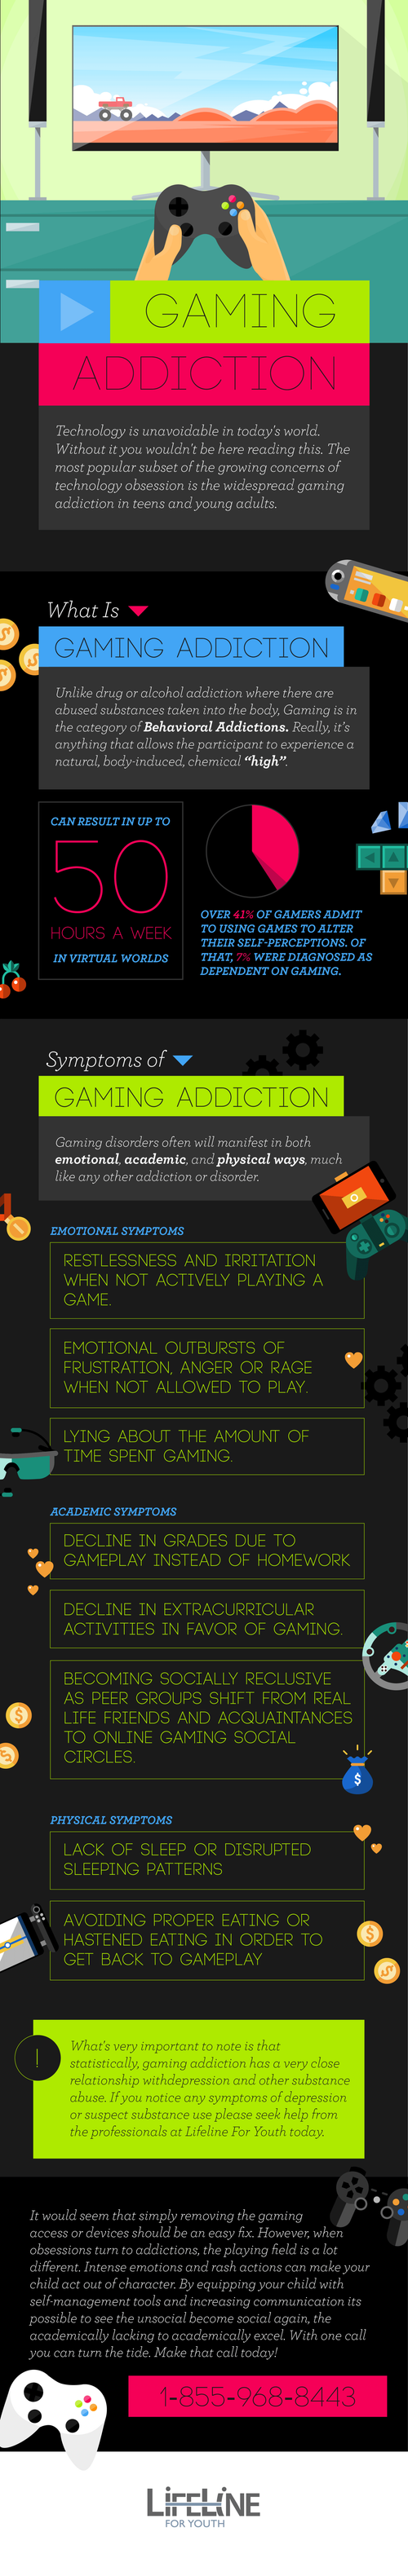 Gaming Addiction – North Salt Lake, Utah – Lifeline for Youth